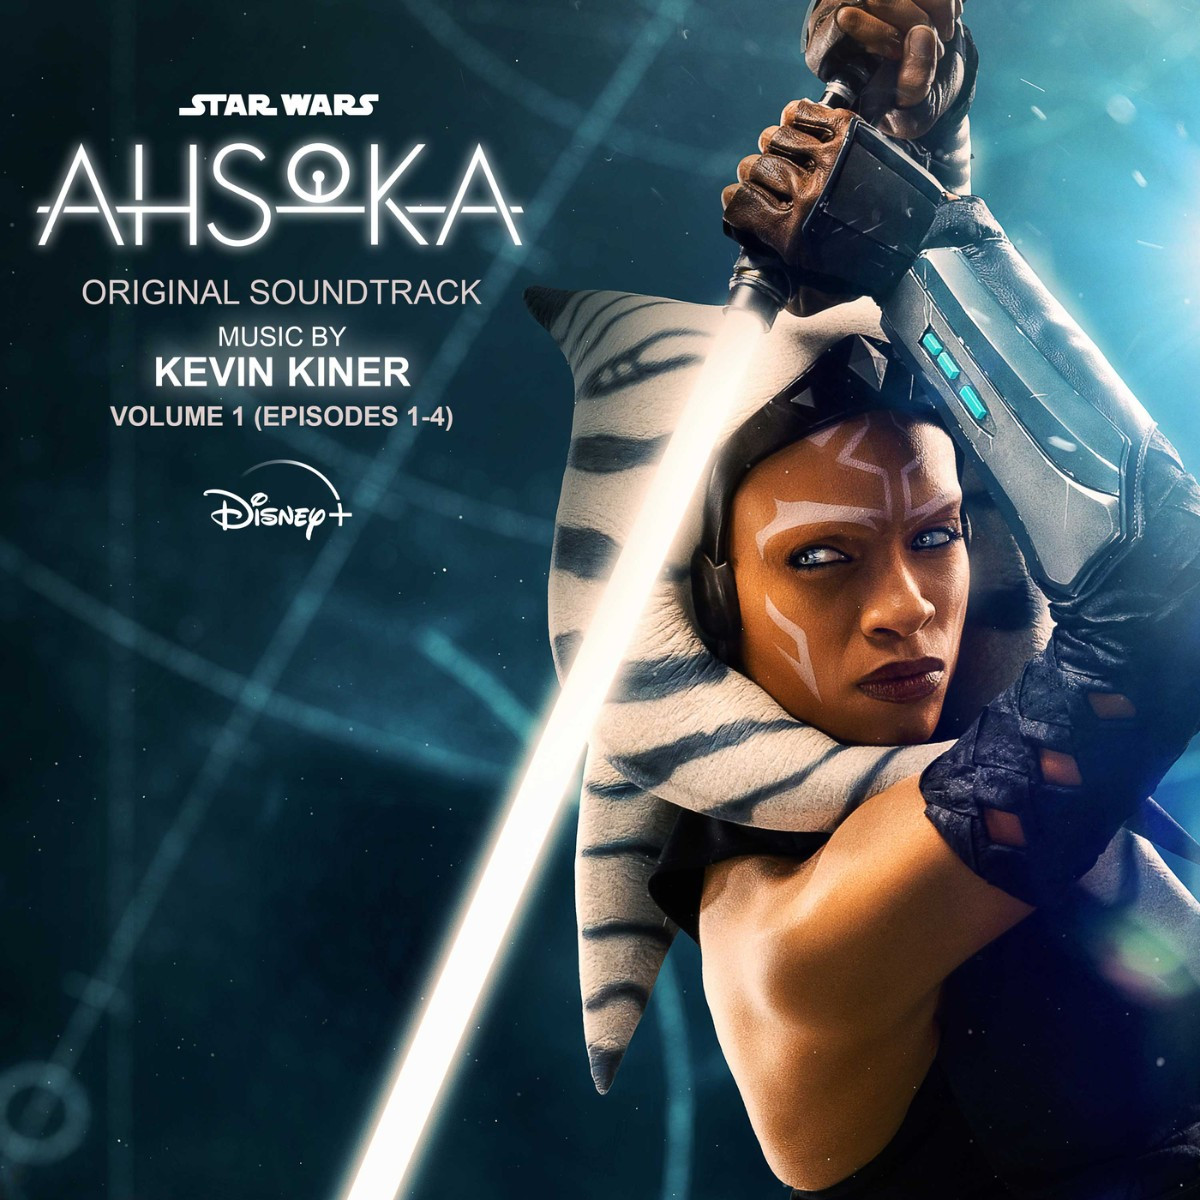 Ahsoka Vol. 1 Soundtrack (Episodes 1-4 by Kevin Kiner) -- Seeders: 3 -- Leechers: 0